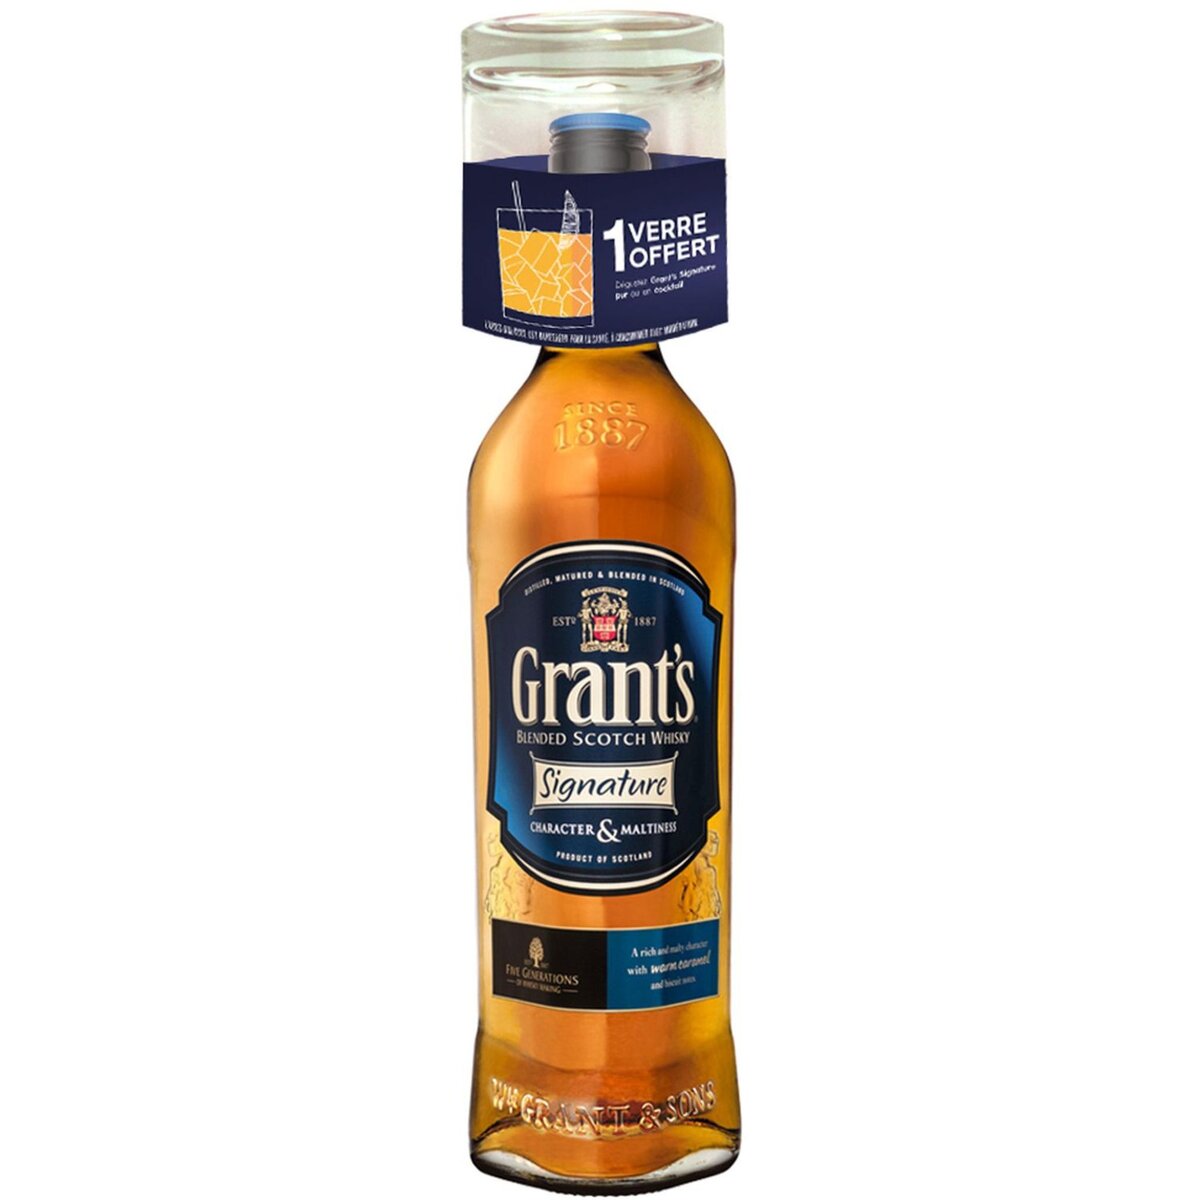 Grant's whisky signature 40° -70cl +verre